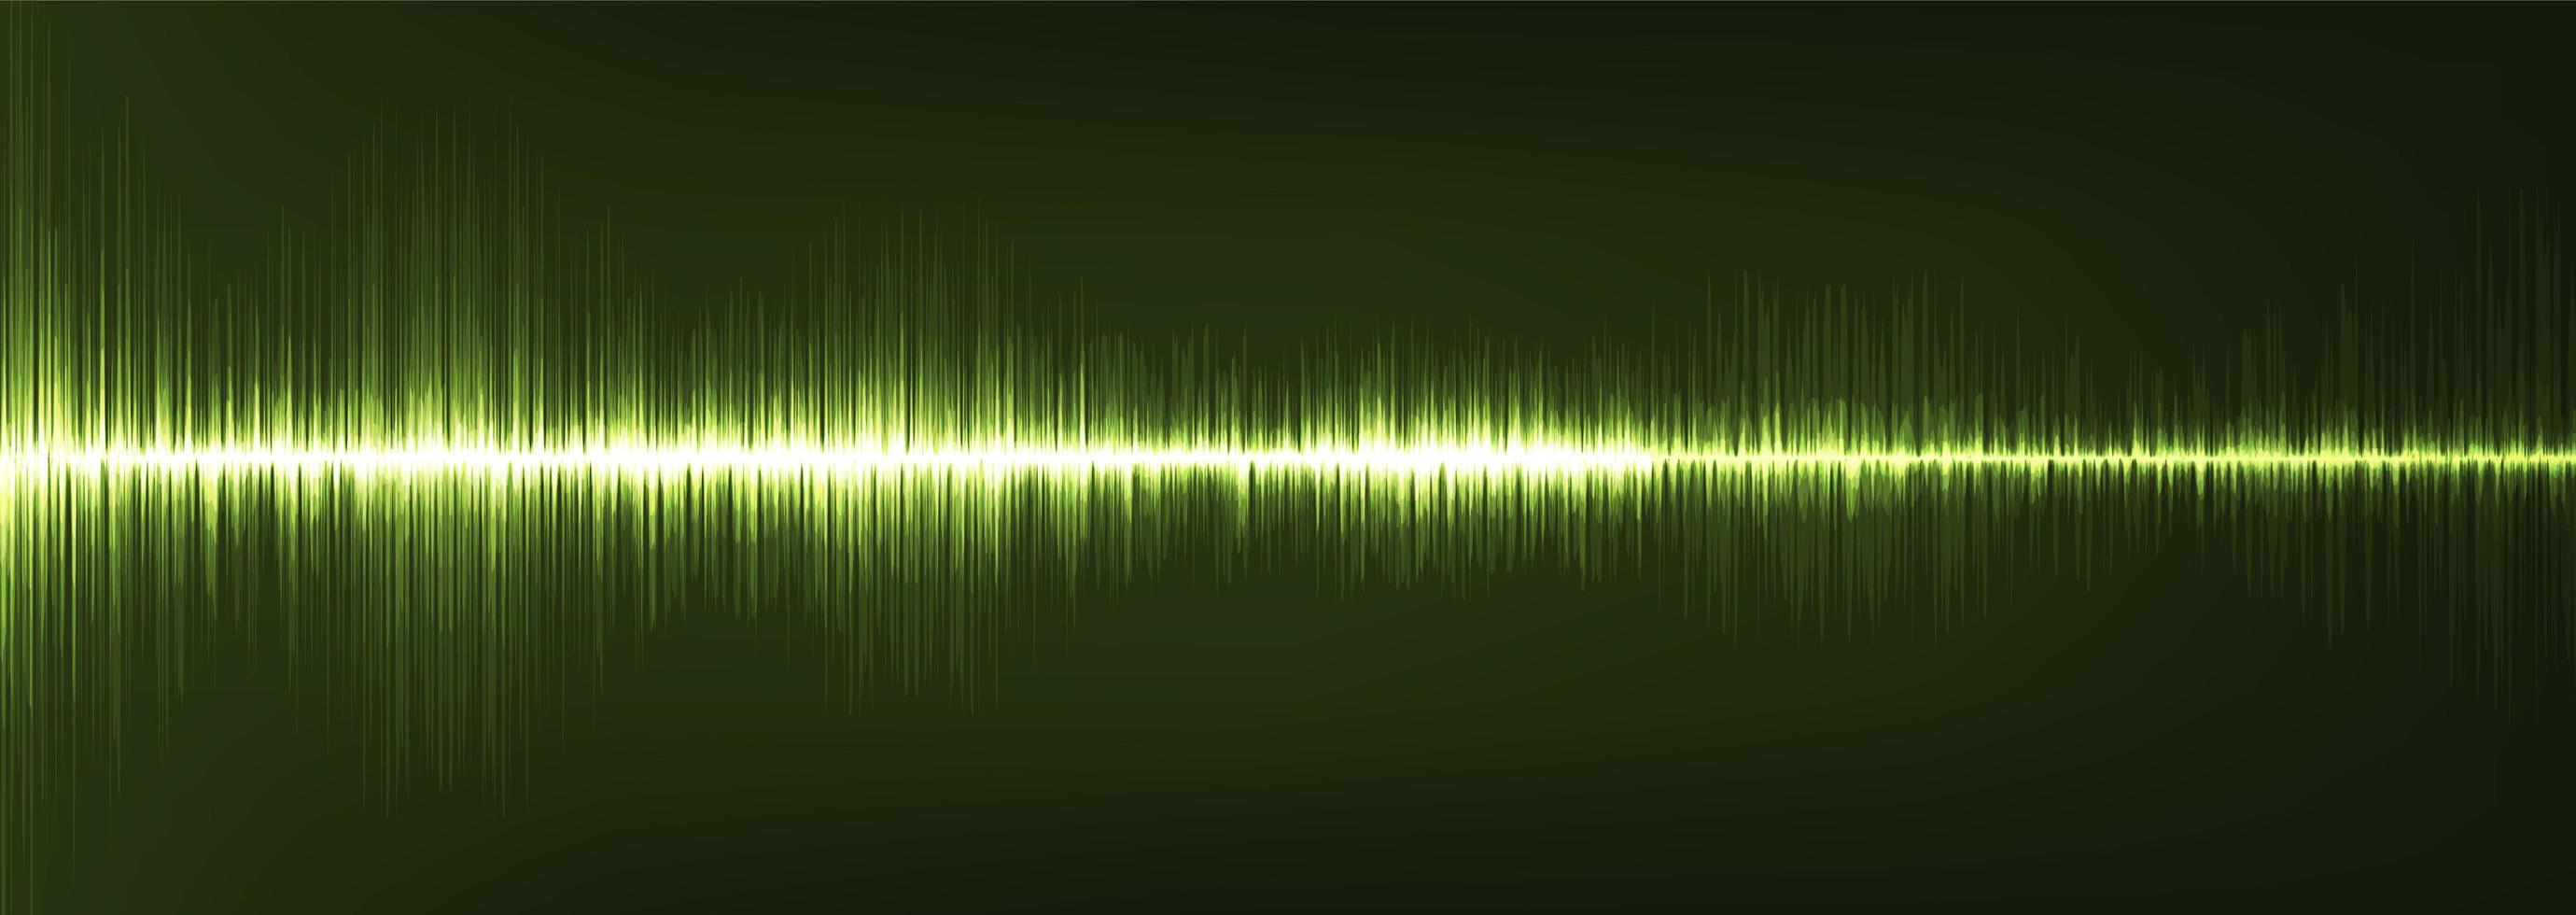 Panoramagrün digitale Schallwelle niedrige und hohe Richterskala vektor